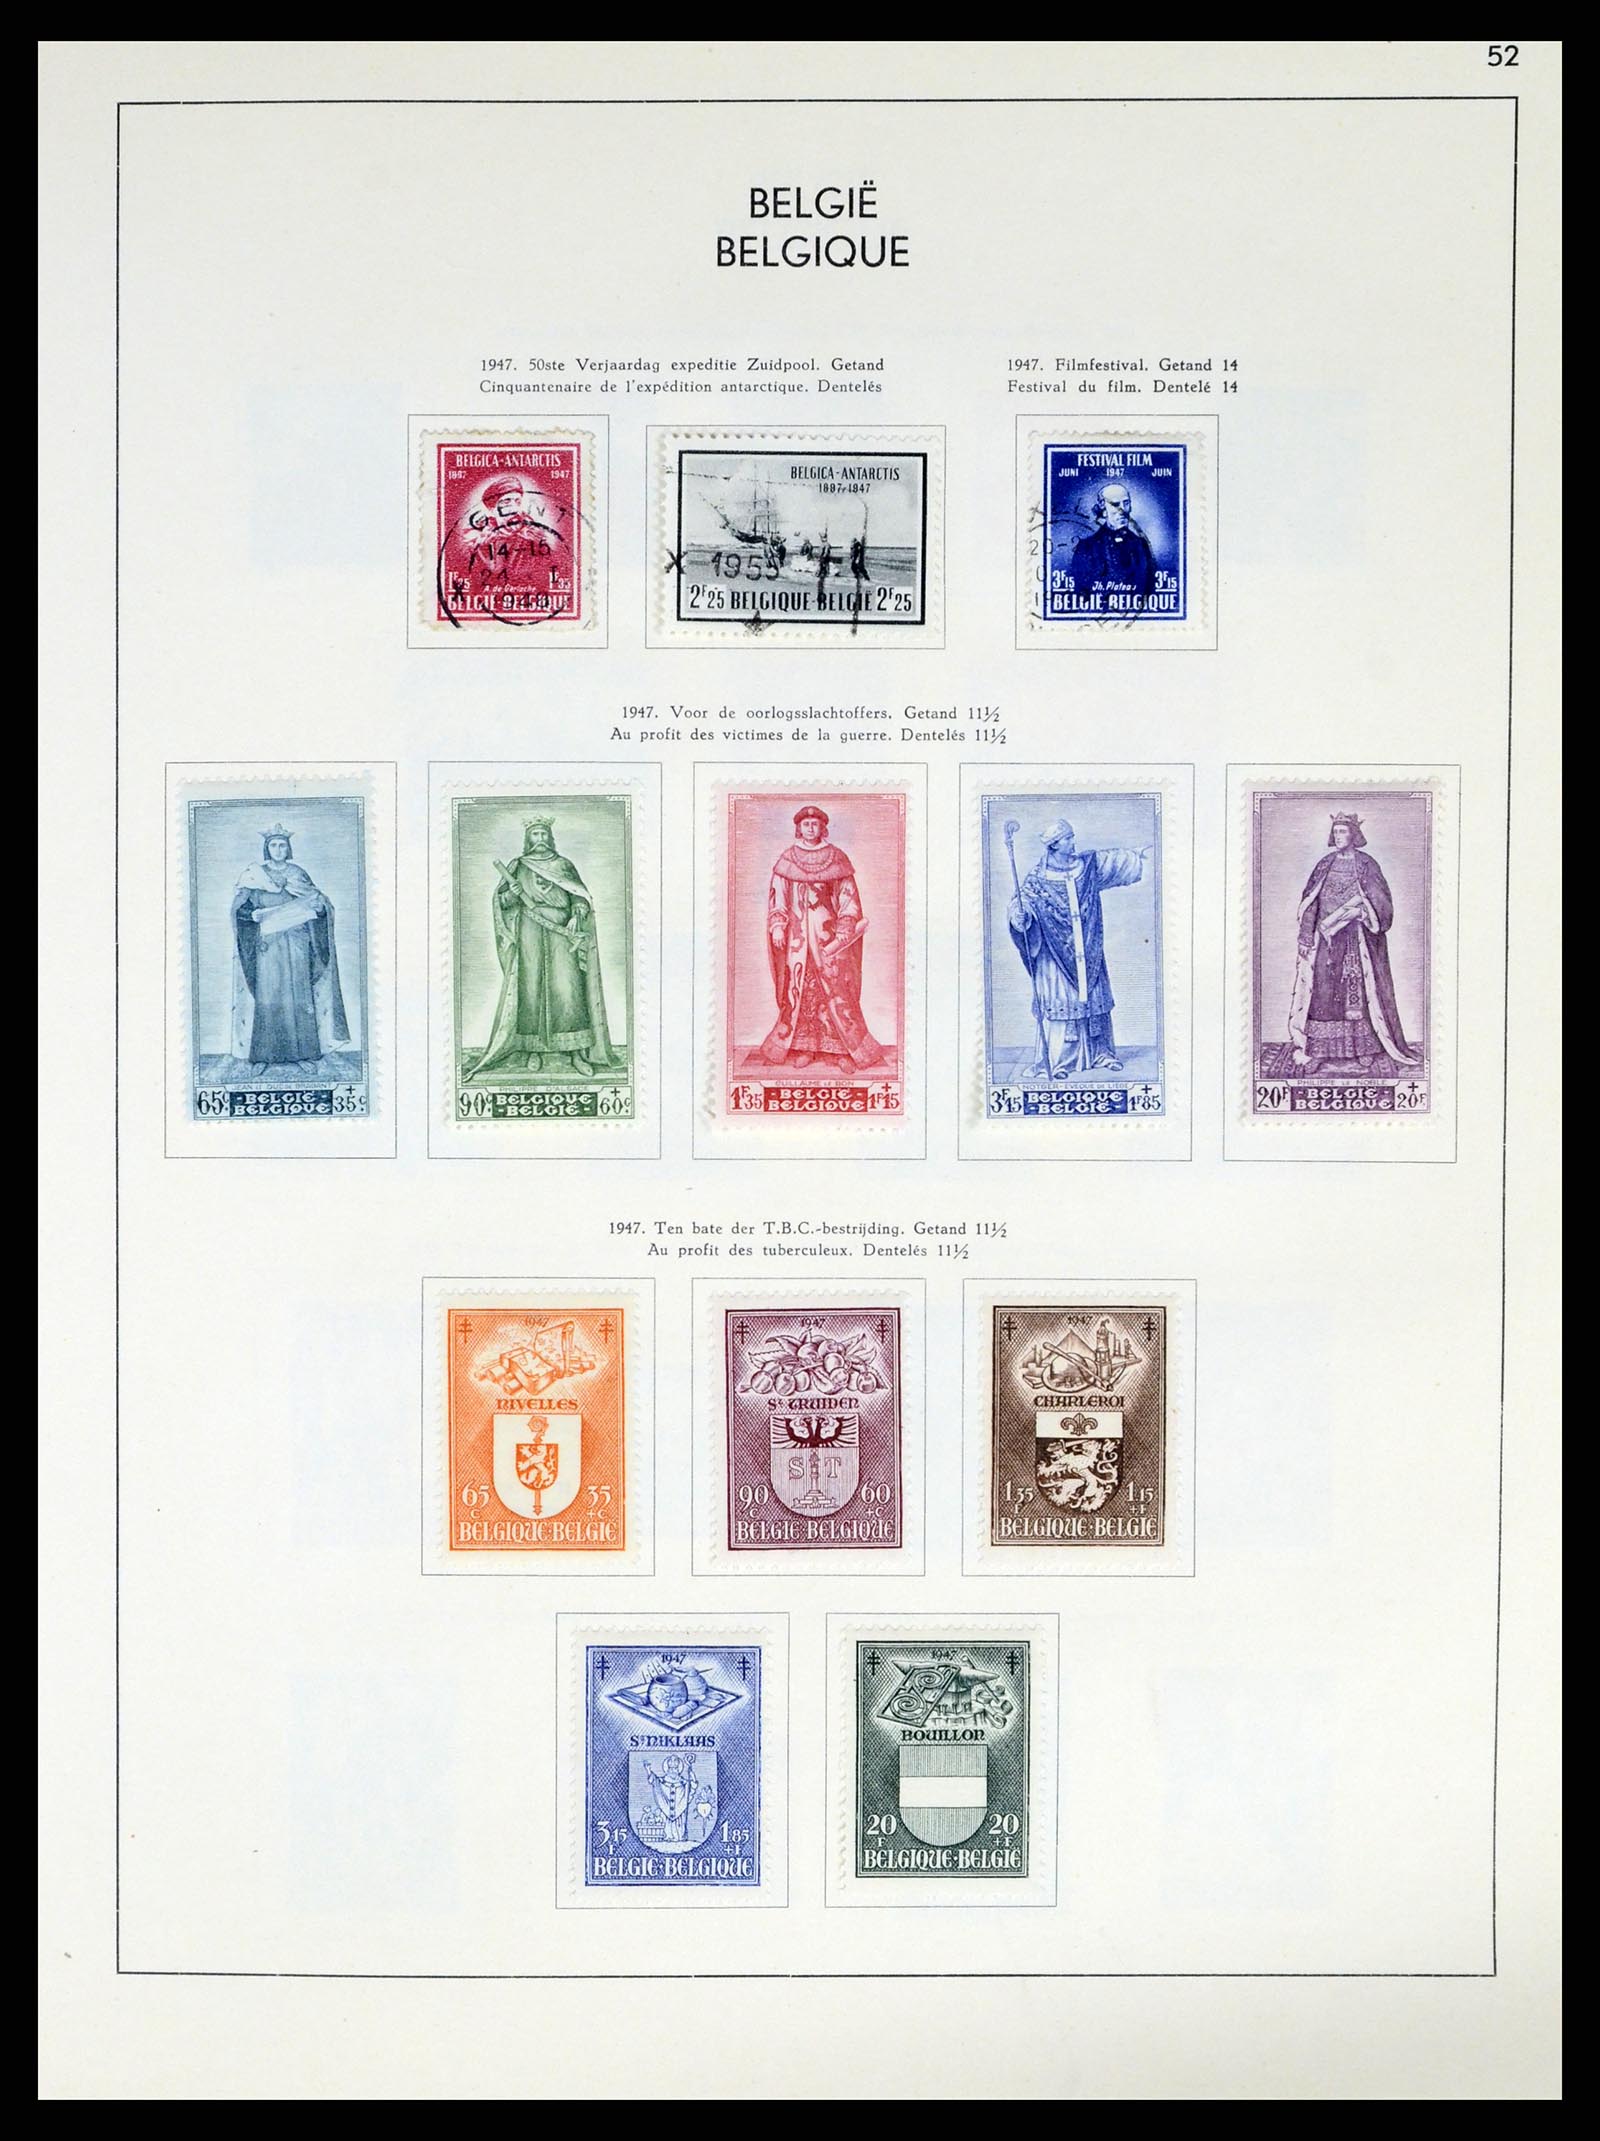 37959 072 - Stamp Collection 37959 Belgium and Belgian Congo 1849-1960.